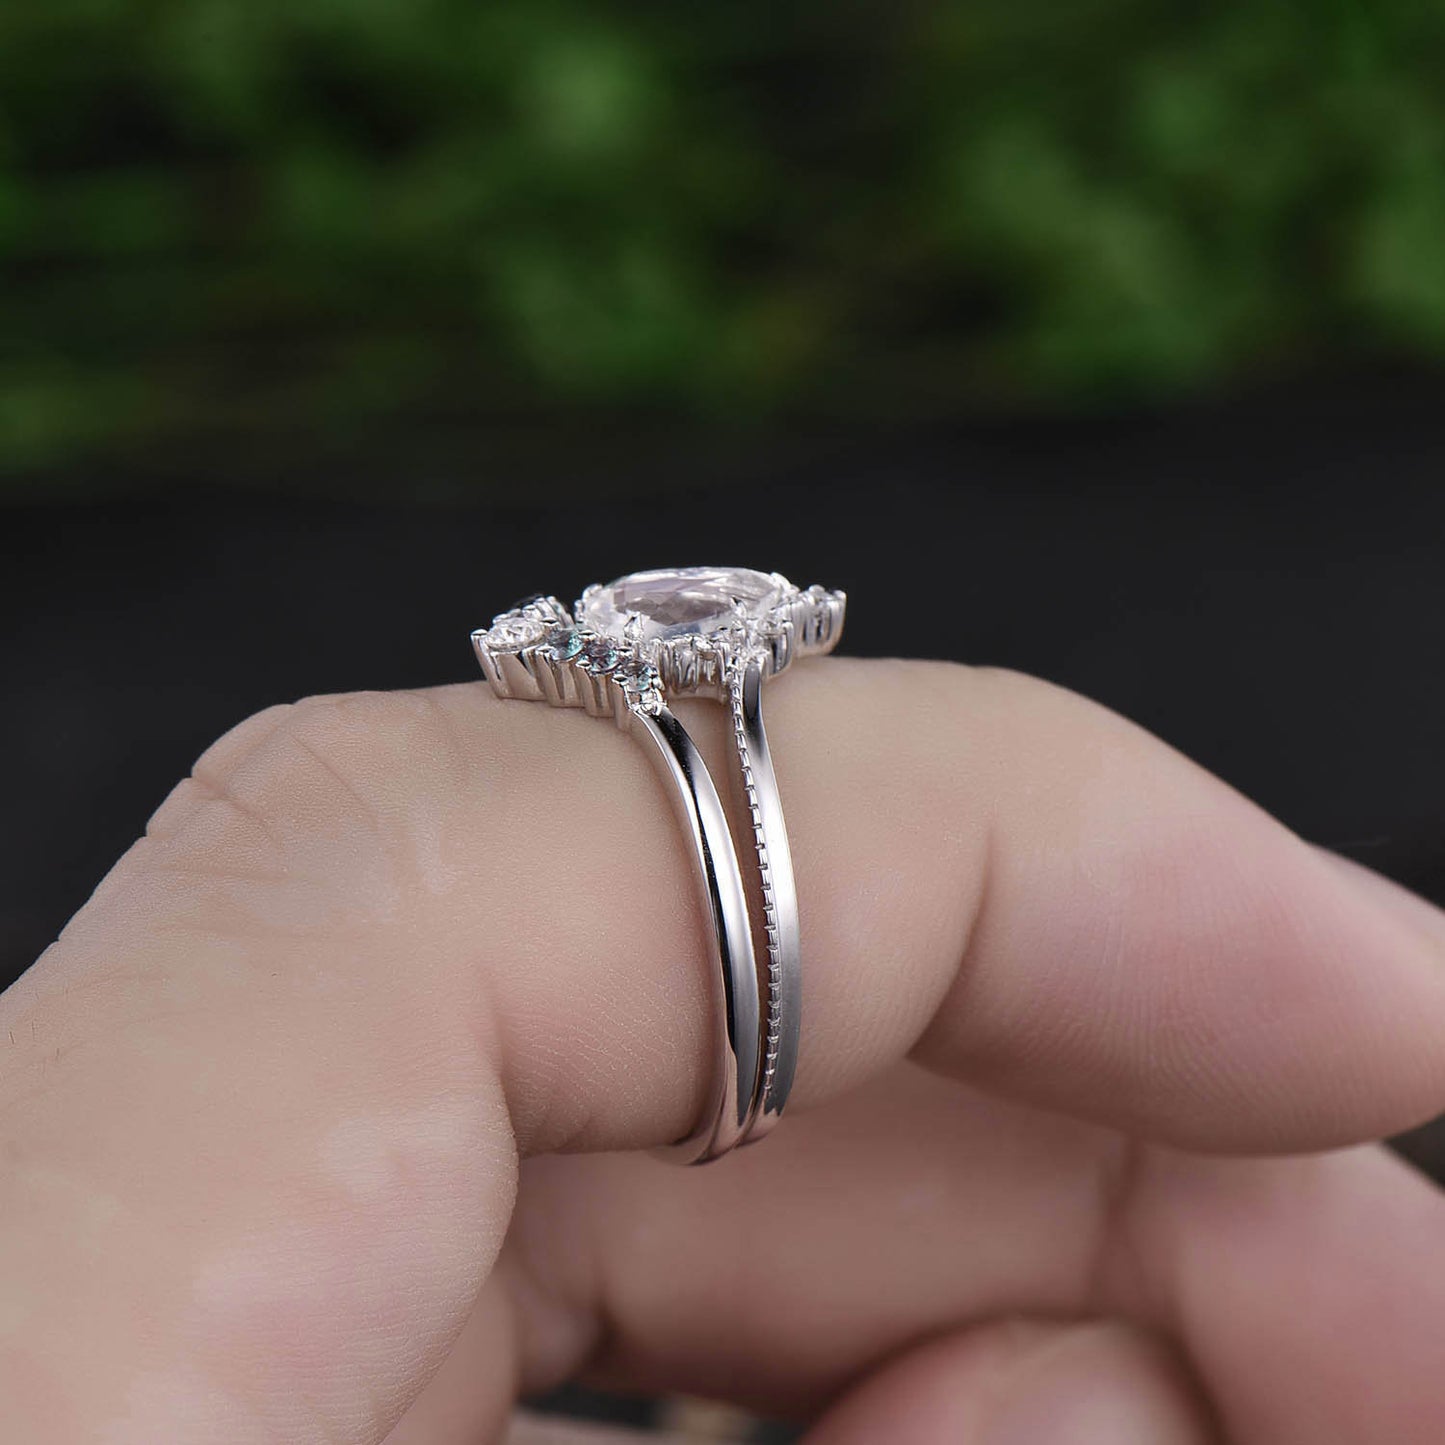 2pcs pear moonstone engagement ring set vintage alexandrite ring set white gold unique alexandrite wedding band June birthstone ring set